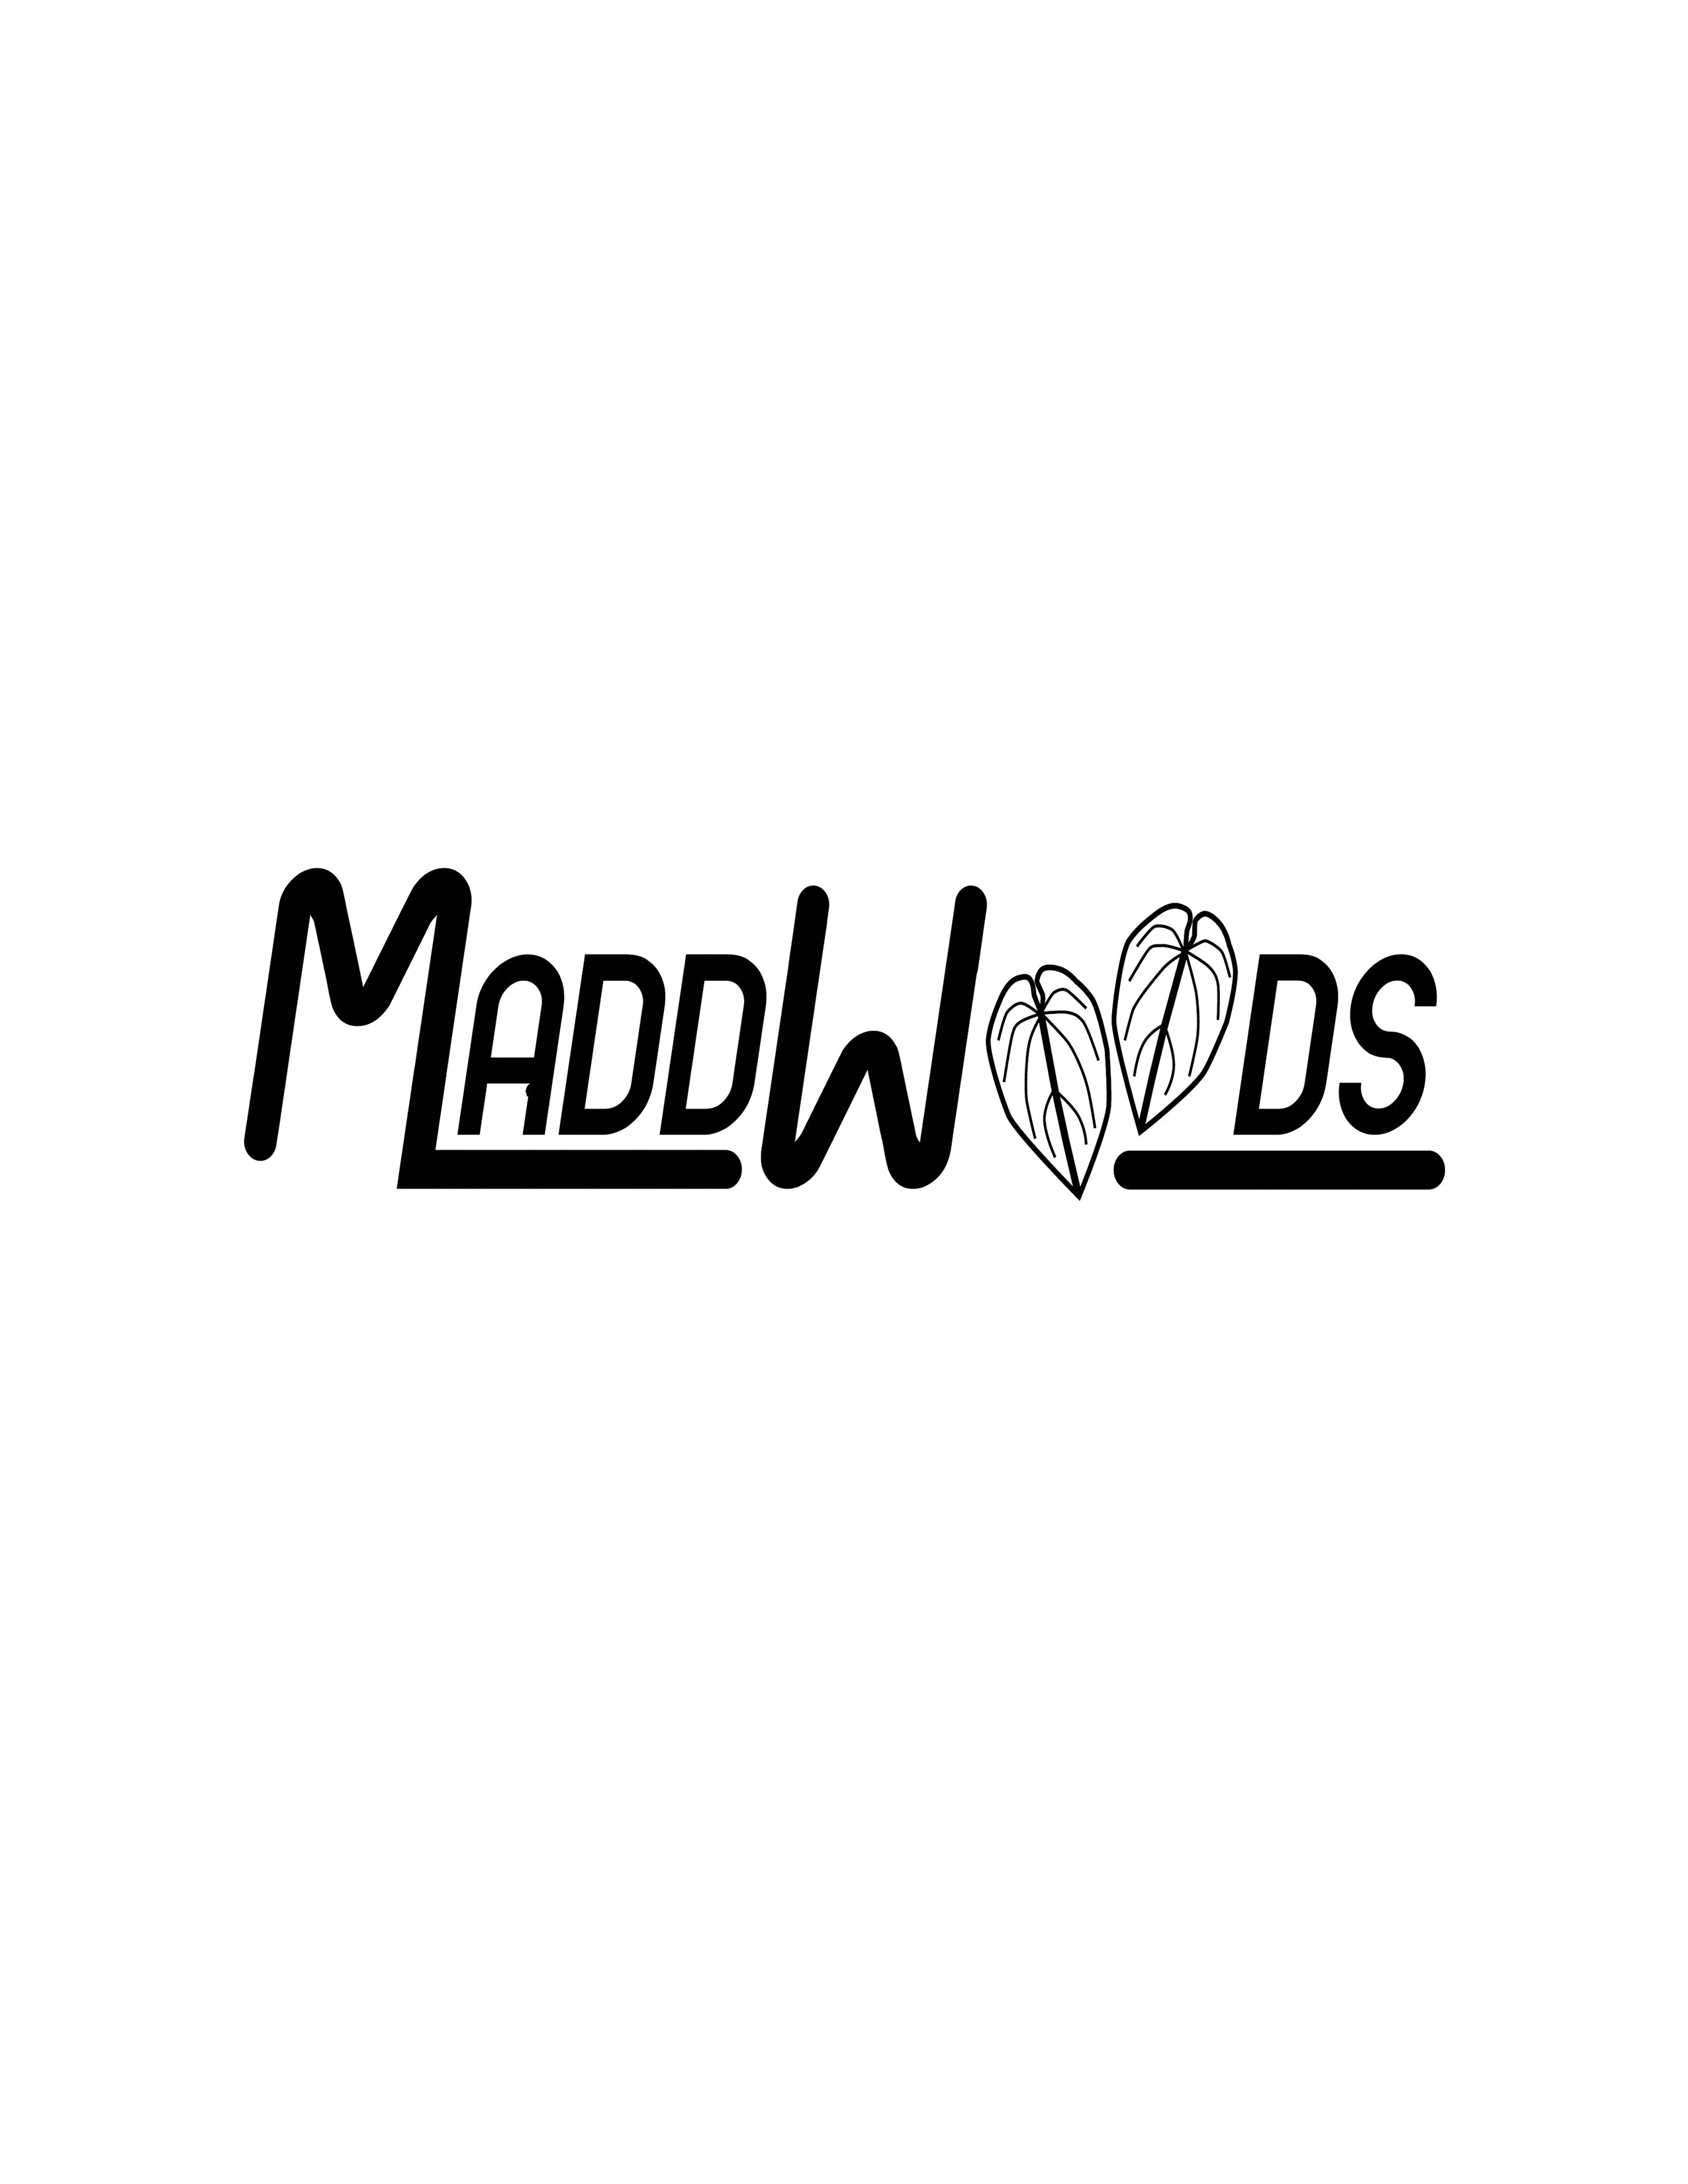 MaddWoods Shelving and Plant Care – Maddwoods